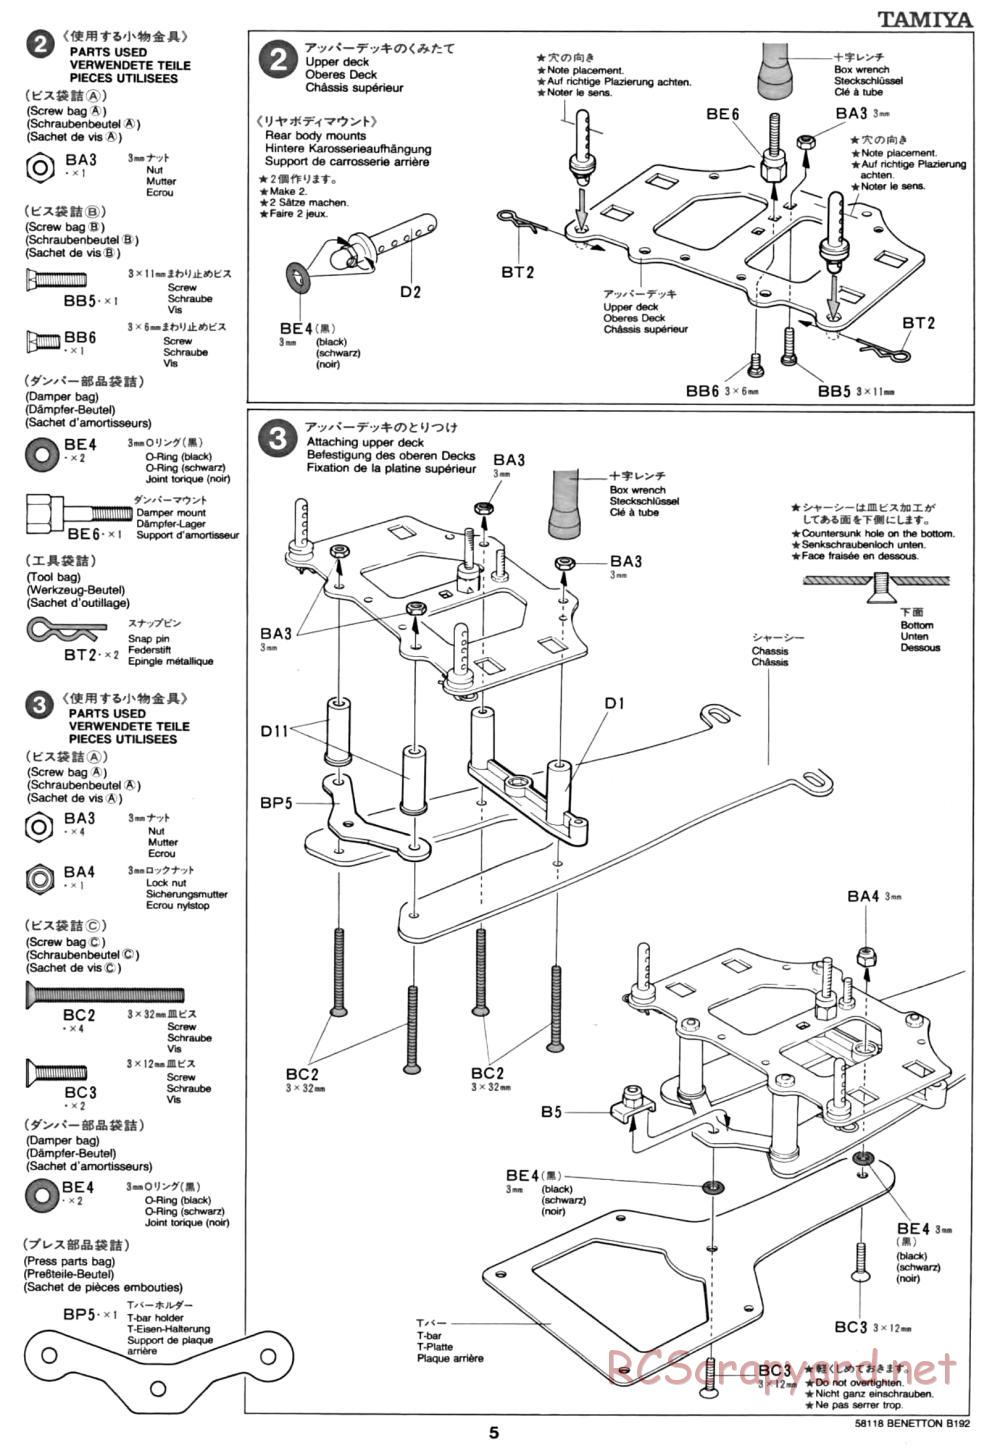 Tamiya - Benetton B192 - F102 Chassis - Manual - Page 5